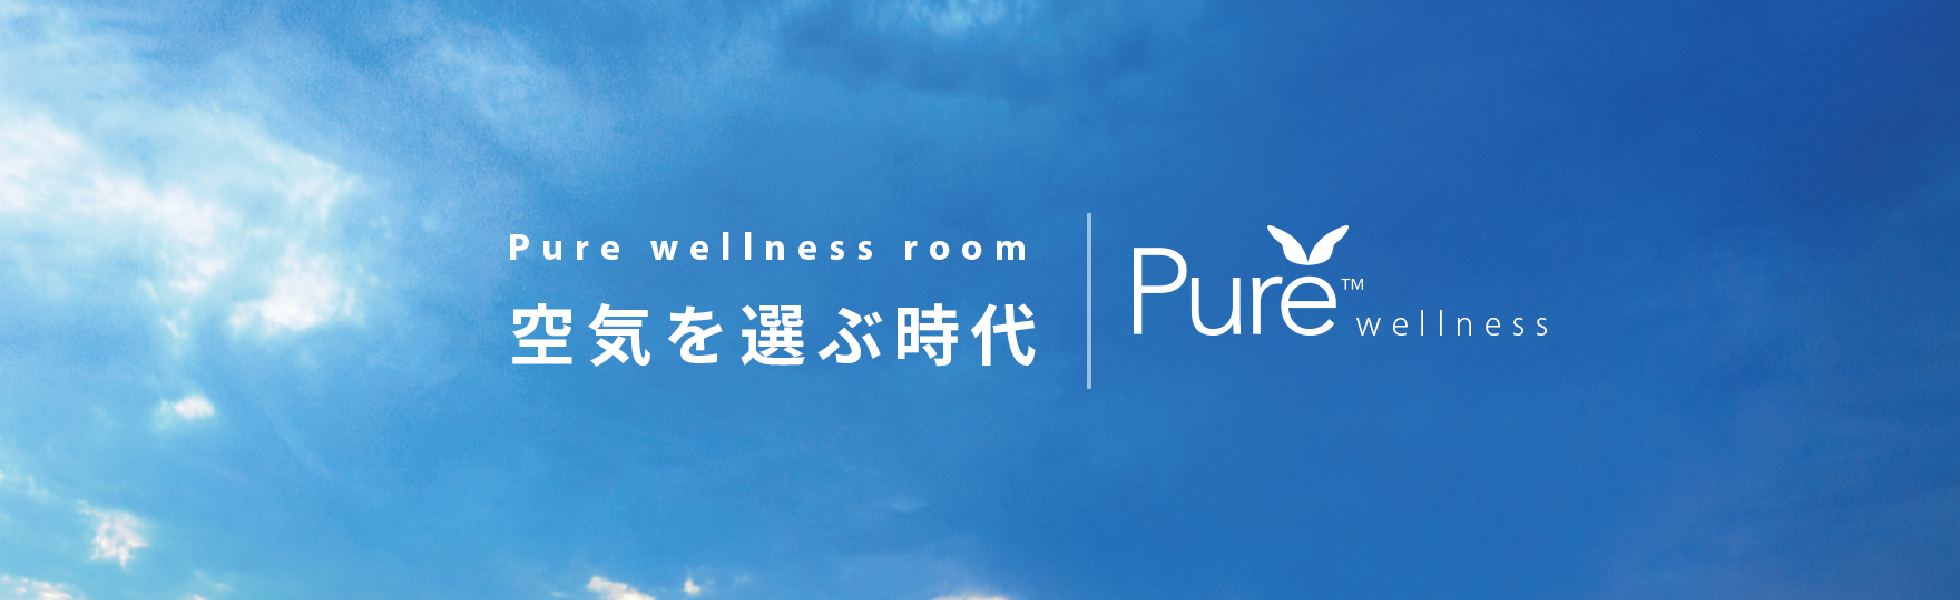 Pure wellness room 空気を選ぶ時代